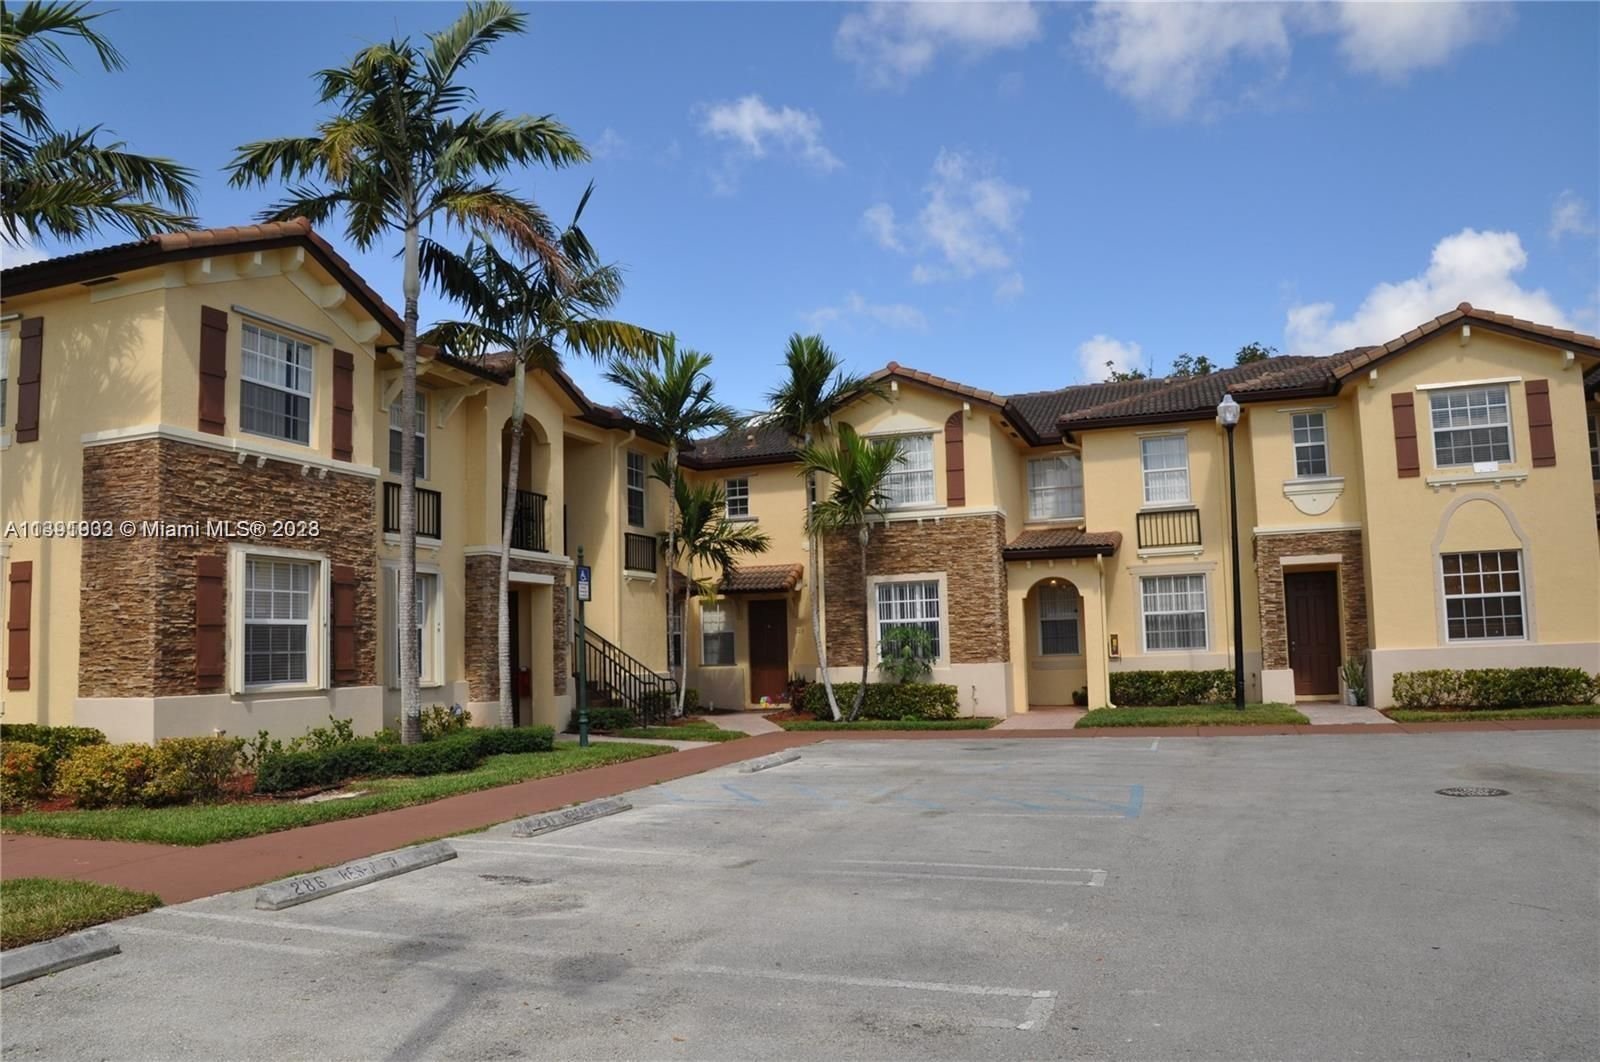 Real estate property located at 1495 33rd Ave #103, Miami-Dade County, VILLAS AT CARMEL CONDO NO, Homestead, FL